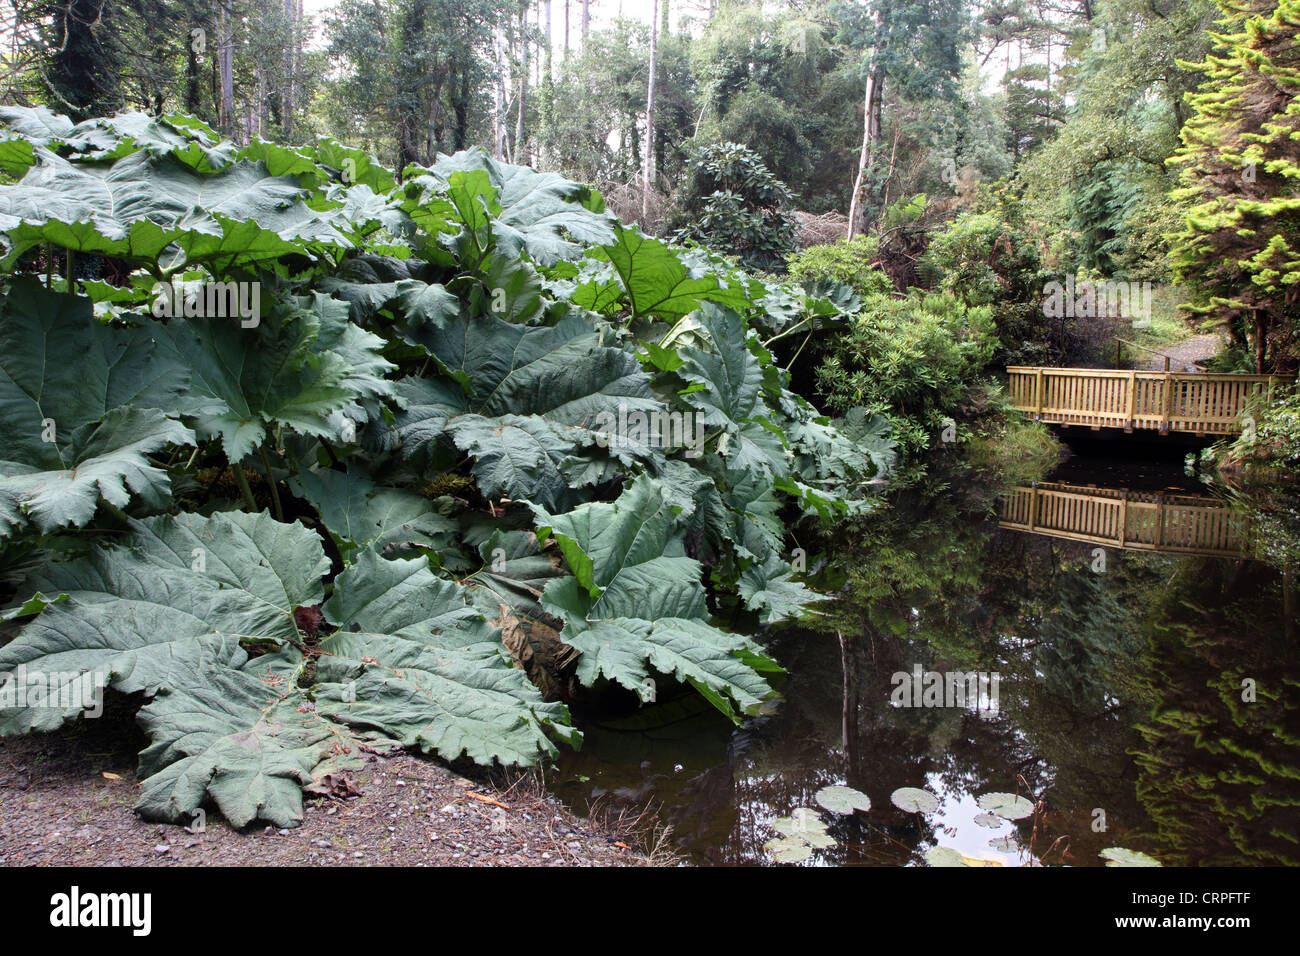 Gunnera Pond in Kells Bay Gardens, 19th century exotic gardens recently restored. Stock Photo